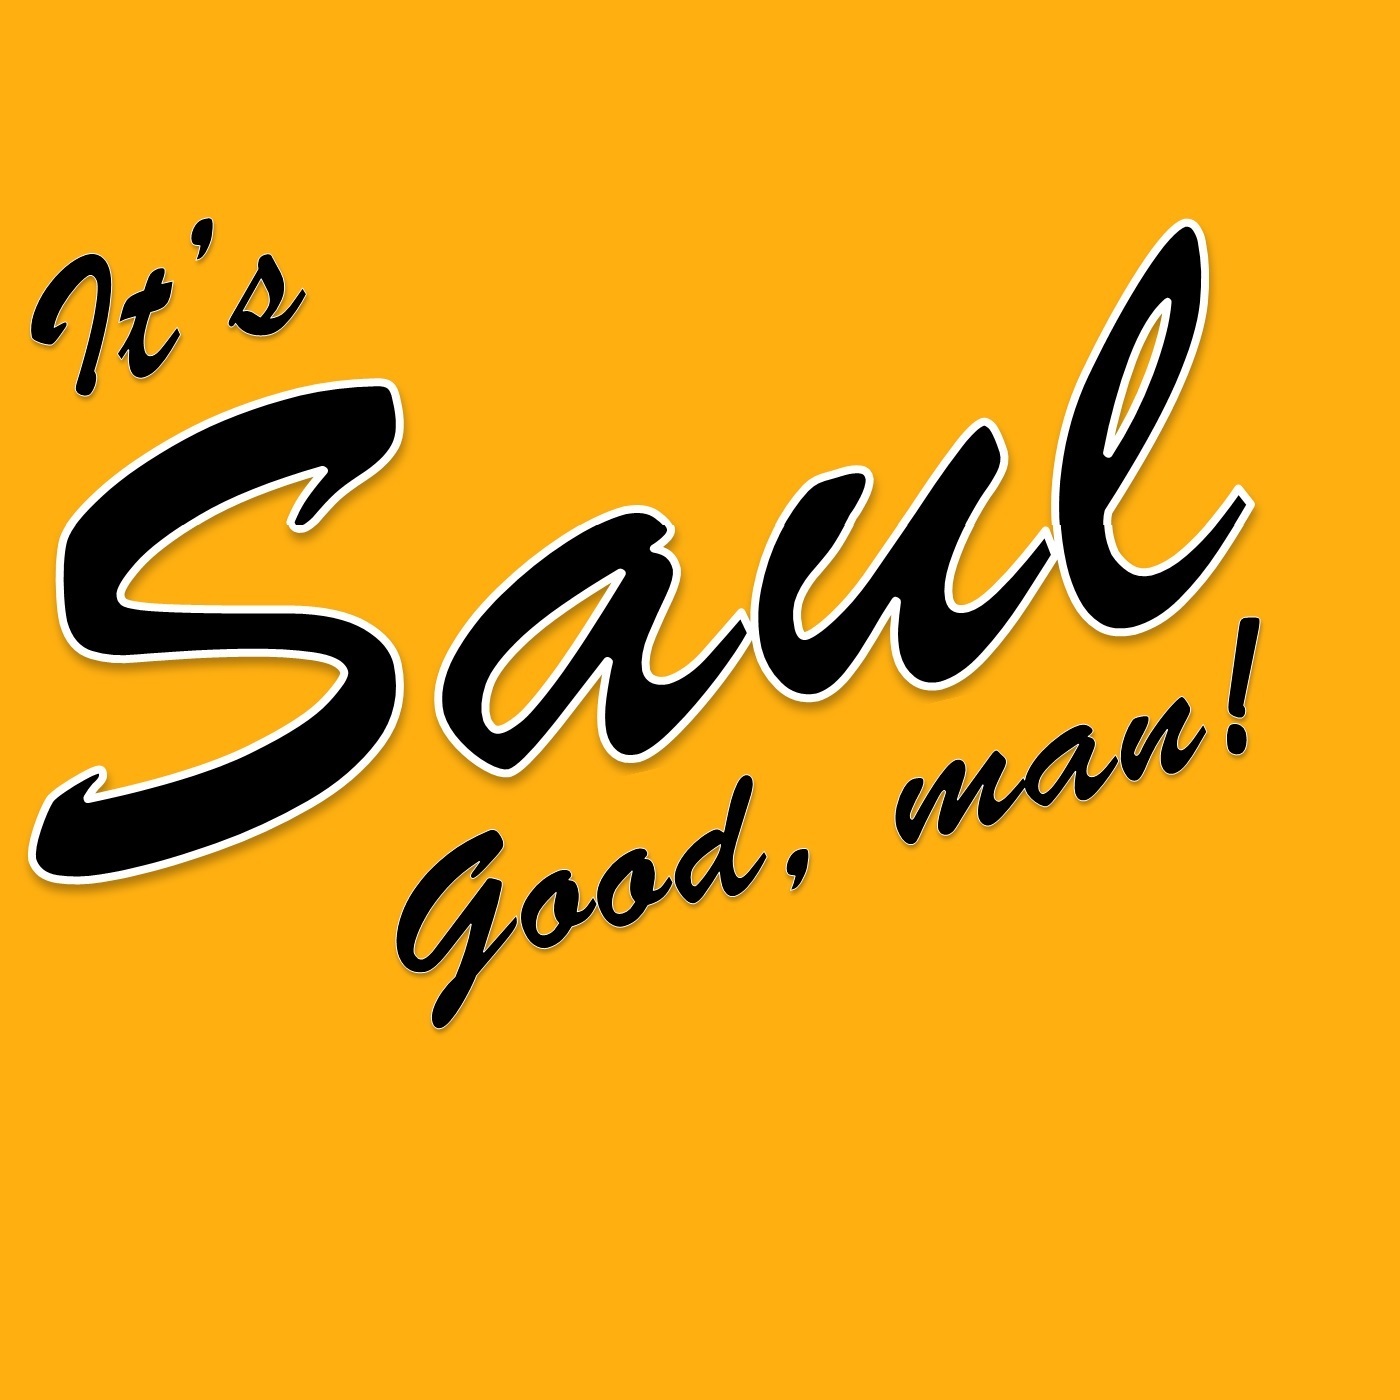 Ep. 1: It’s Saul Good, Man.